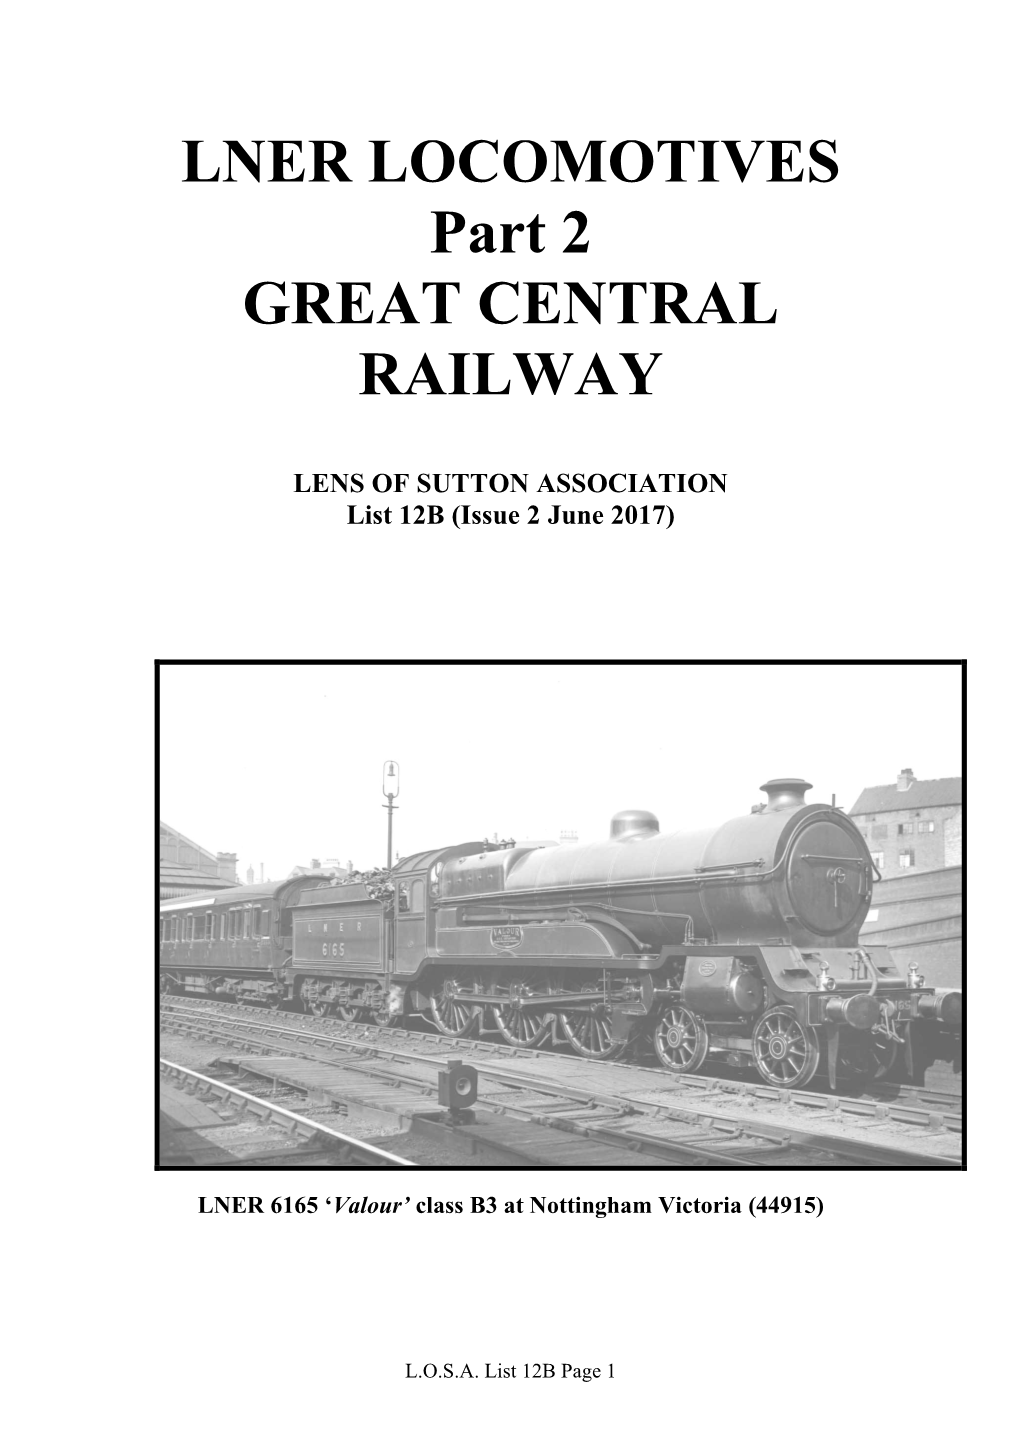 LNER LOCOMOTIVES Part 2 GREAT CENTRAL RAILWAY